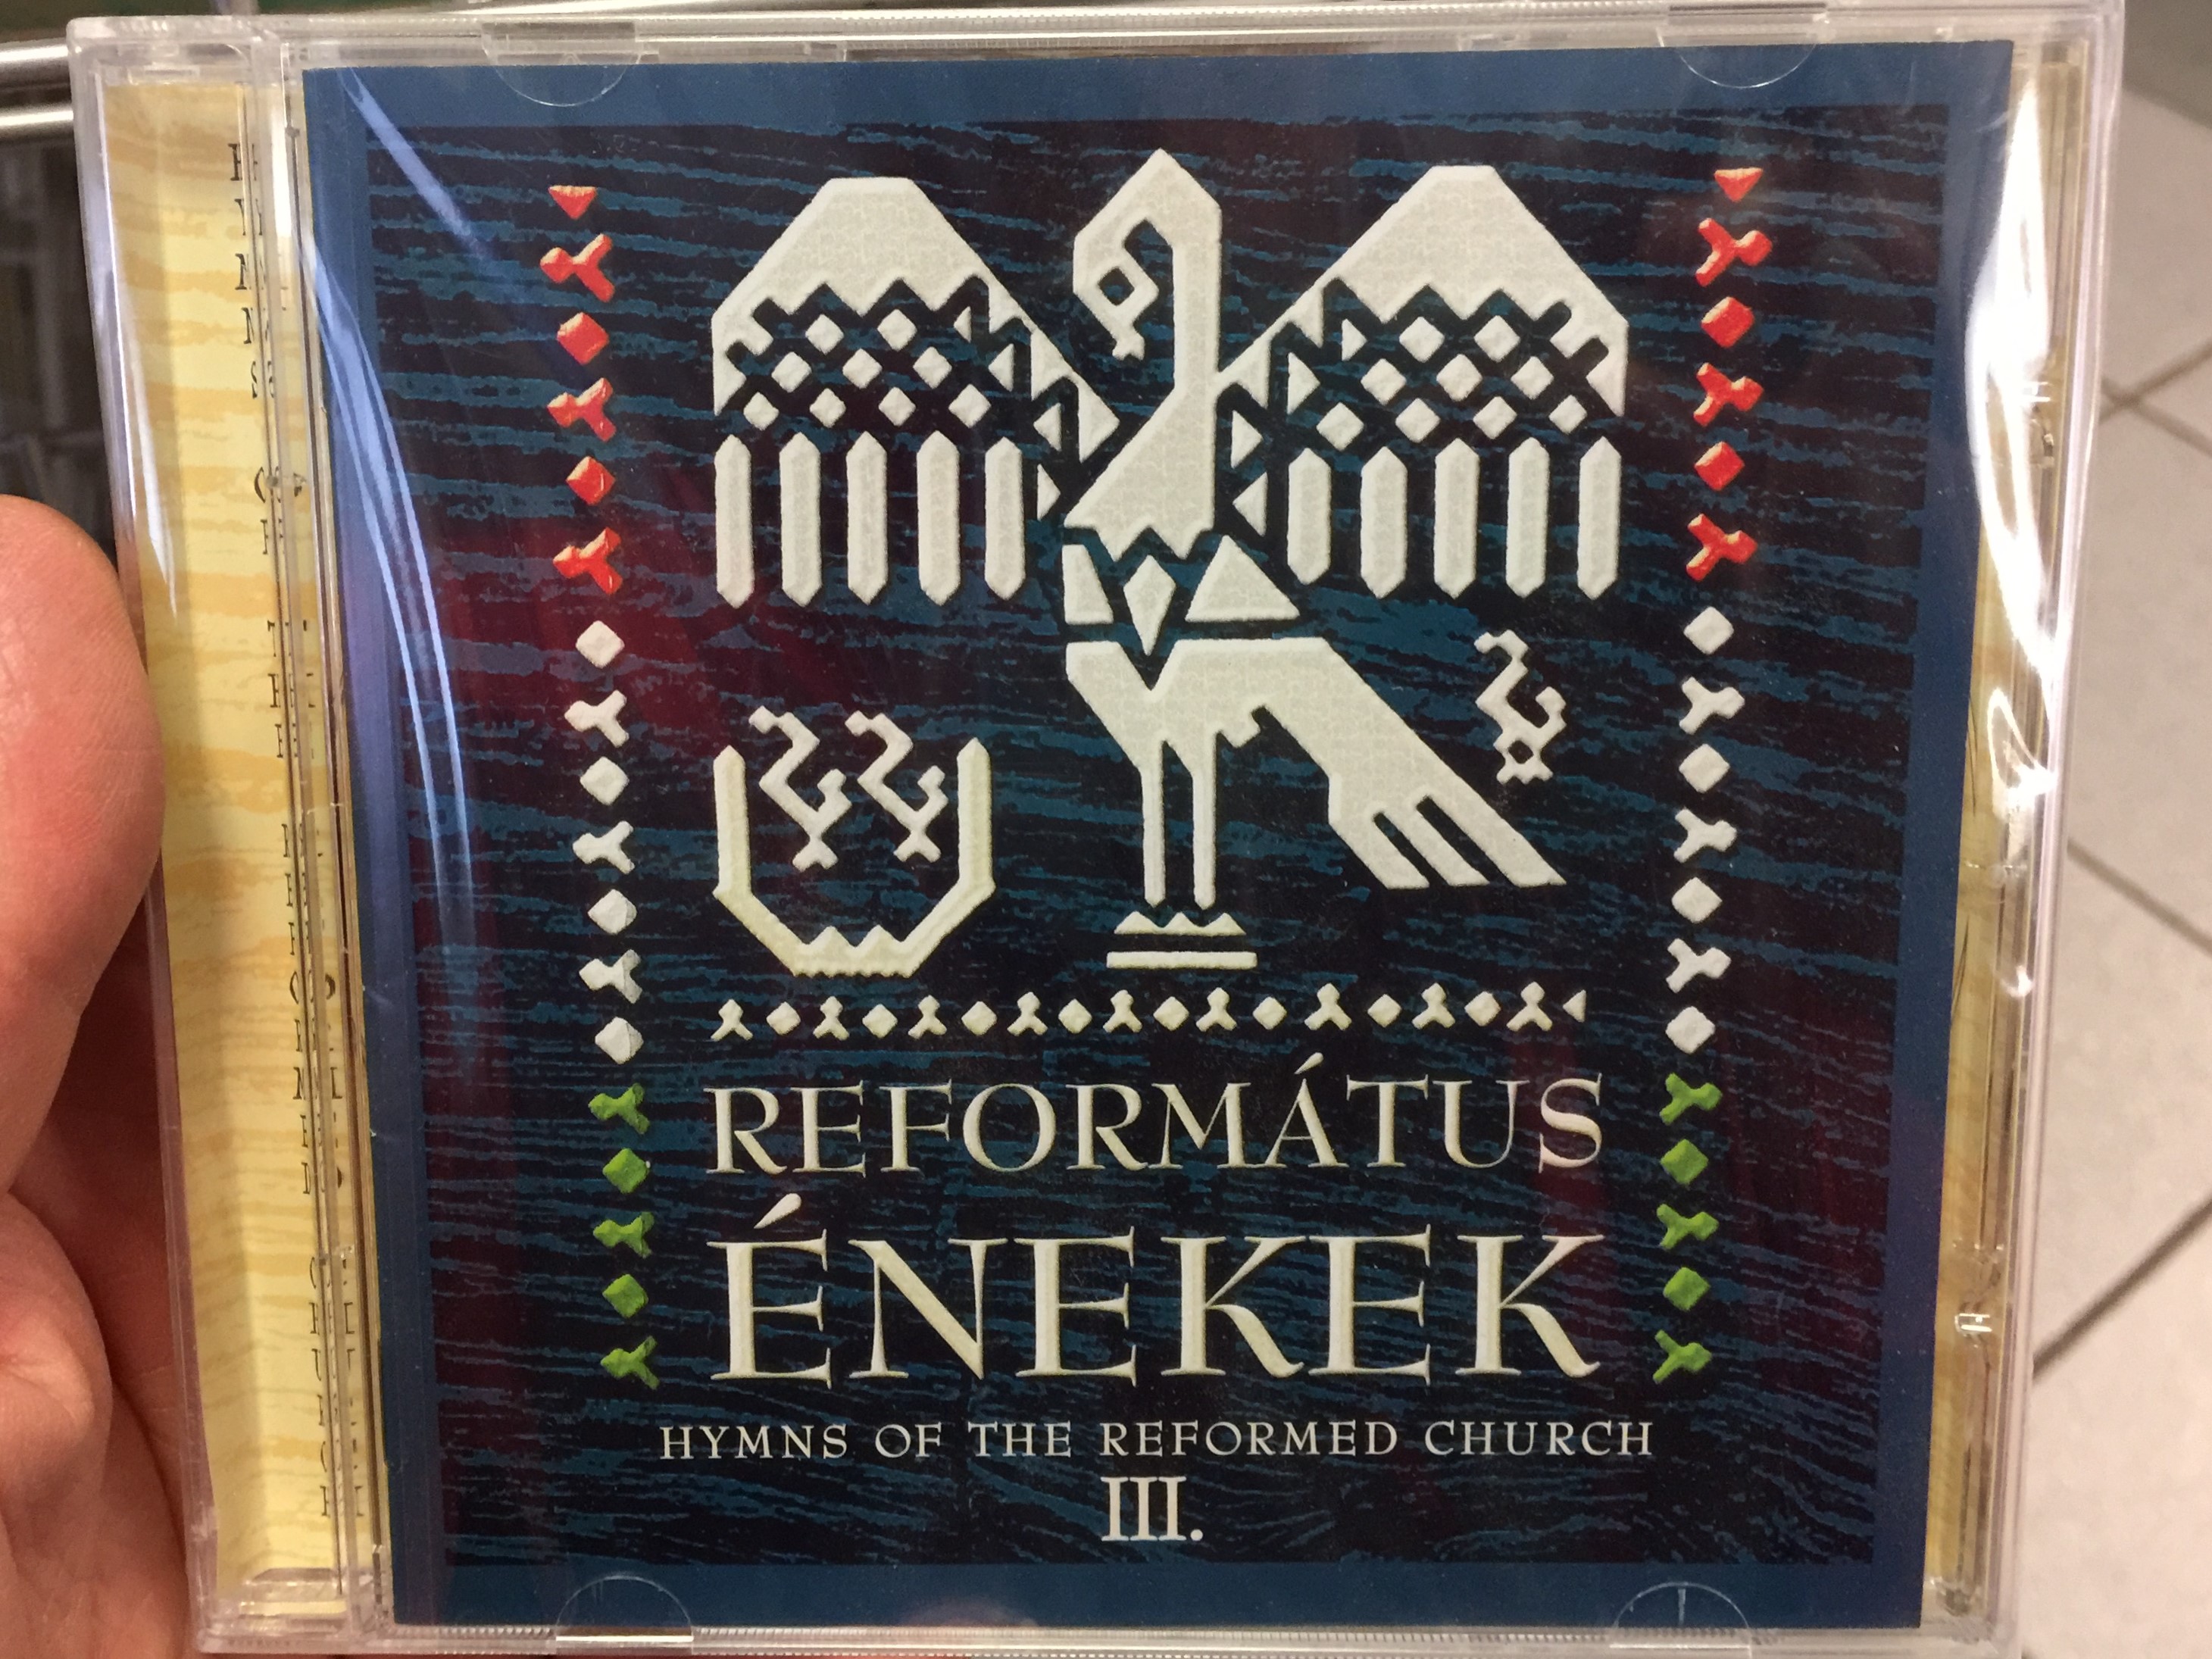 reform-tus-nekek-3.-audio-cd-2004-hymns-of-the-reformed-church-iii.-1.jpg